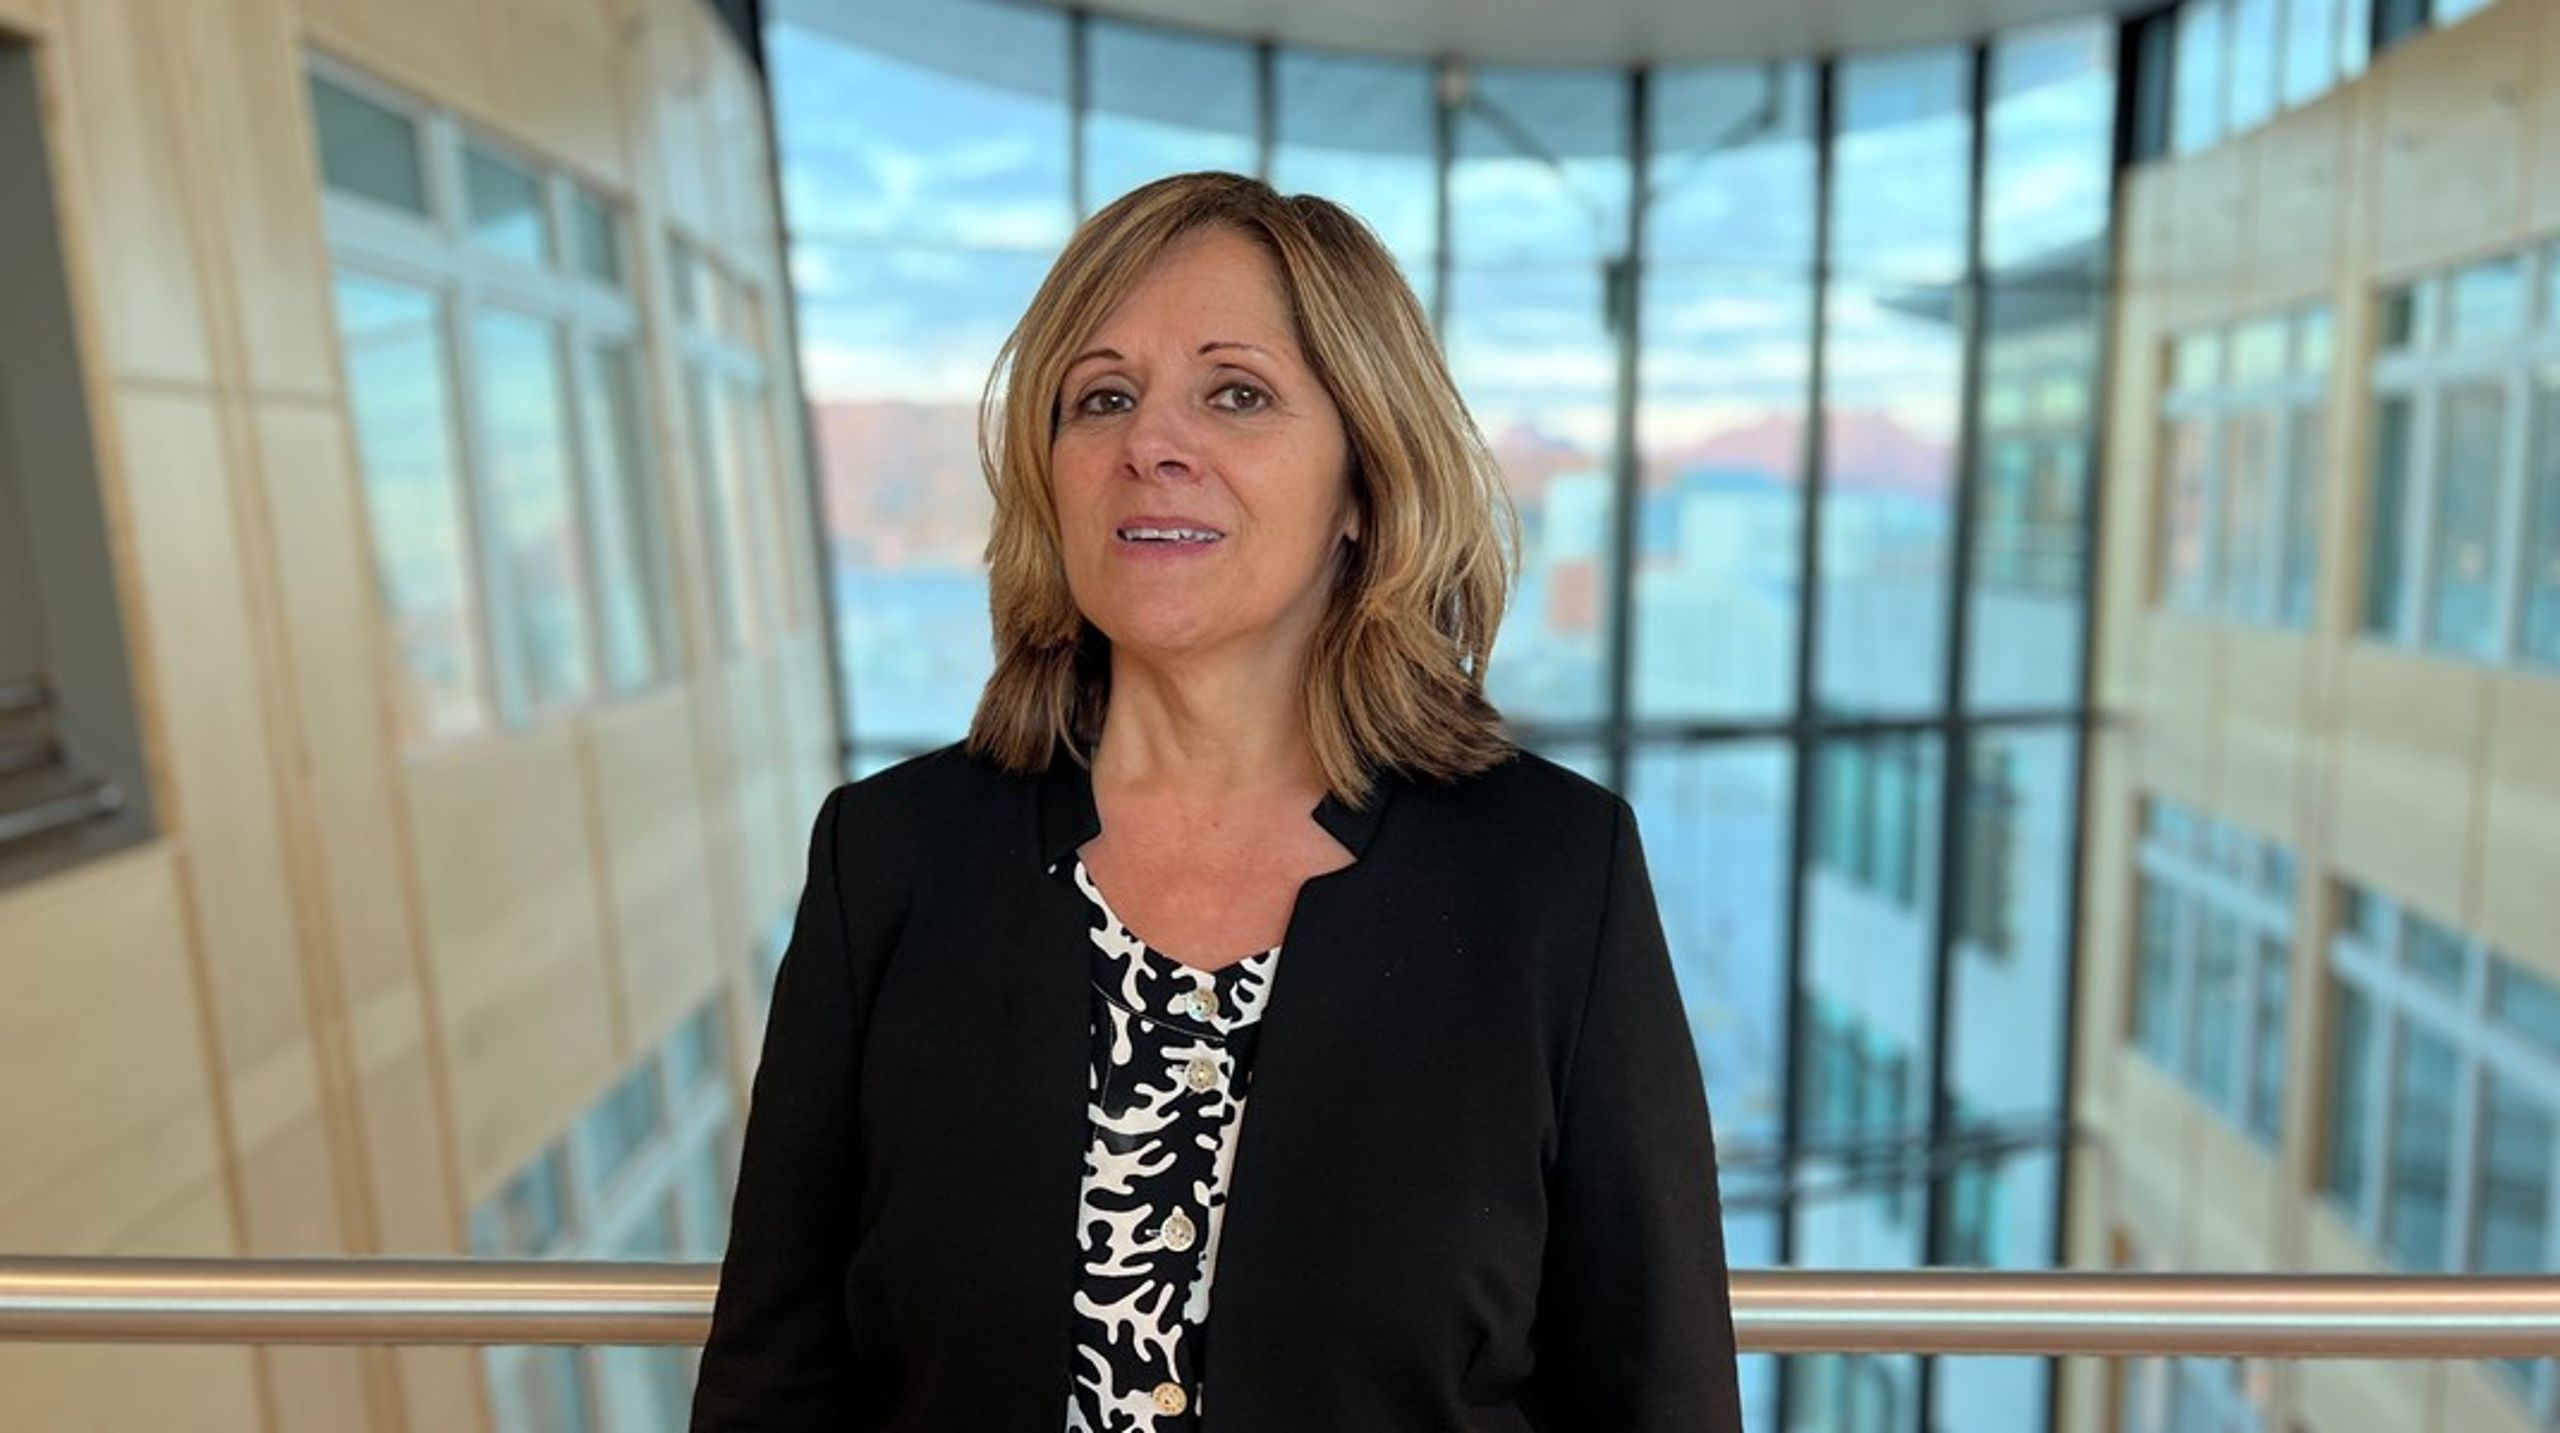 Administrerende direktør i Helse Nord, Marit Lind, står overfor en stor oppgave når hun skal omorganisere sykehustilbudet i Nord-Norge.